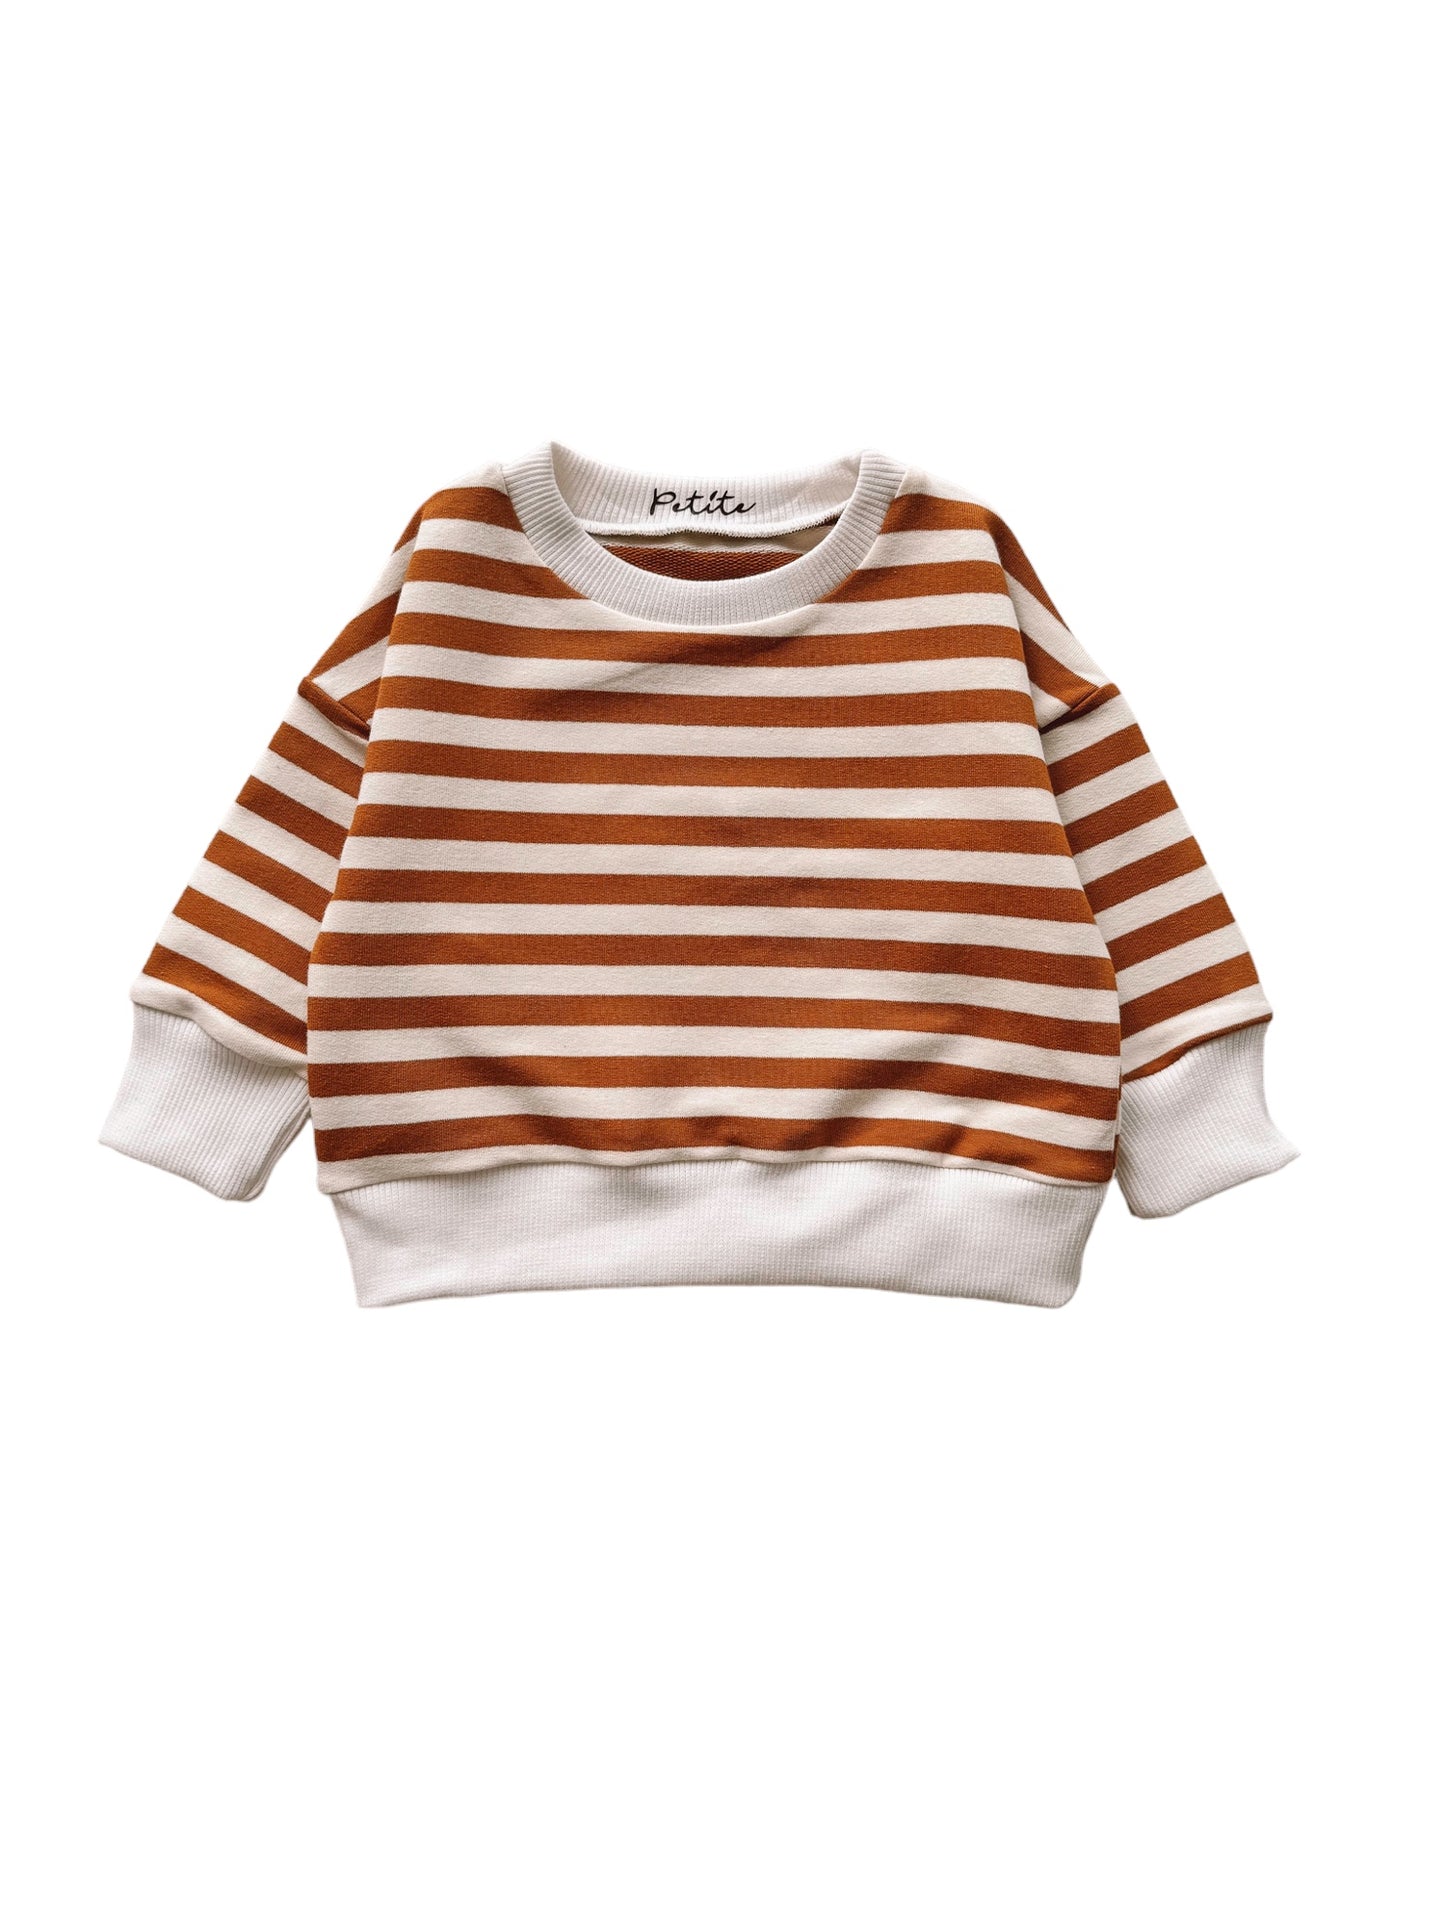 Cotton sweater / burnt orange stripes